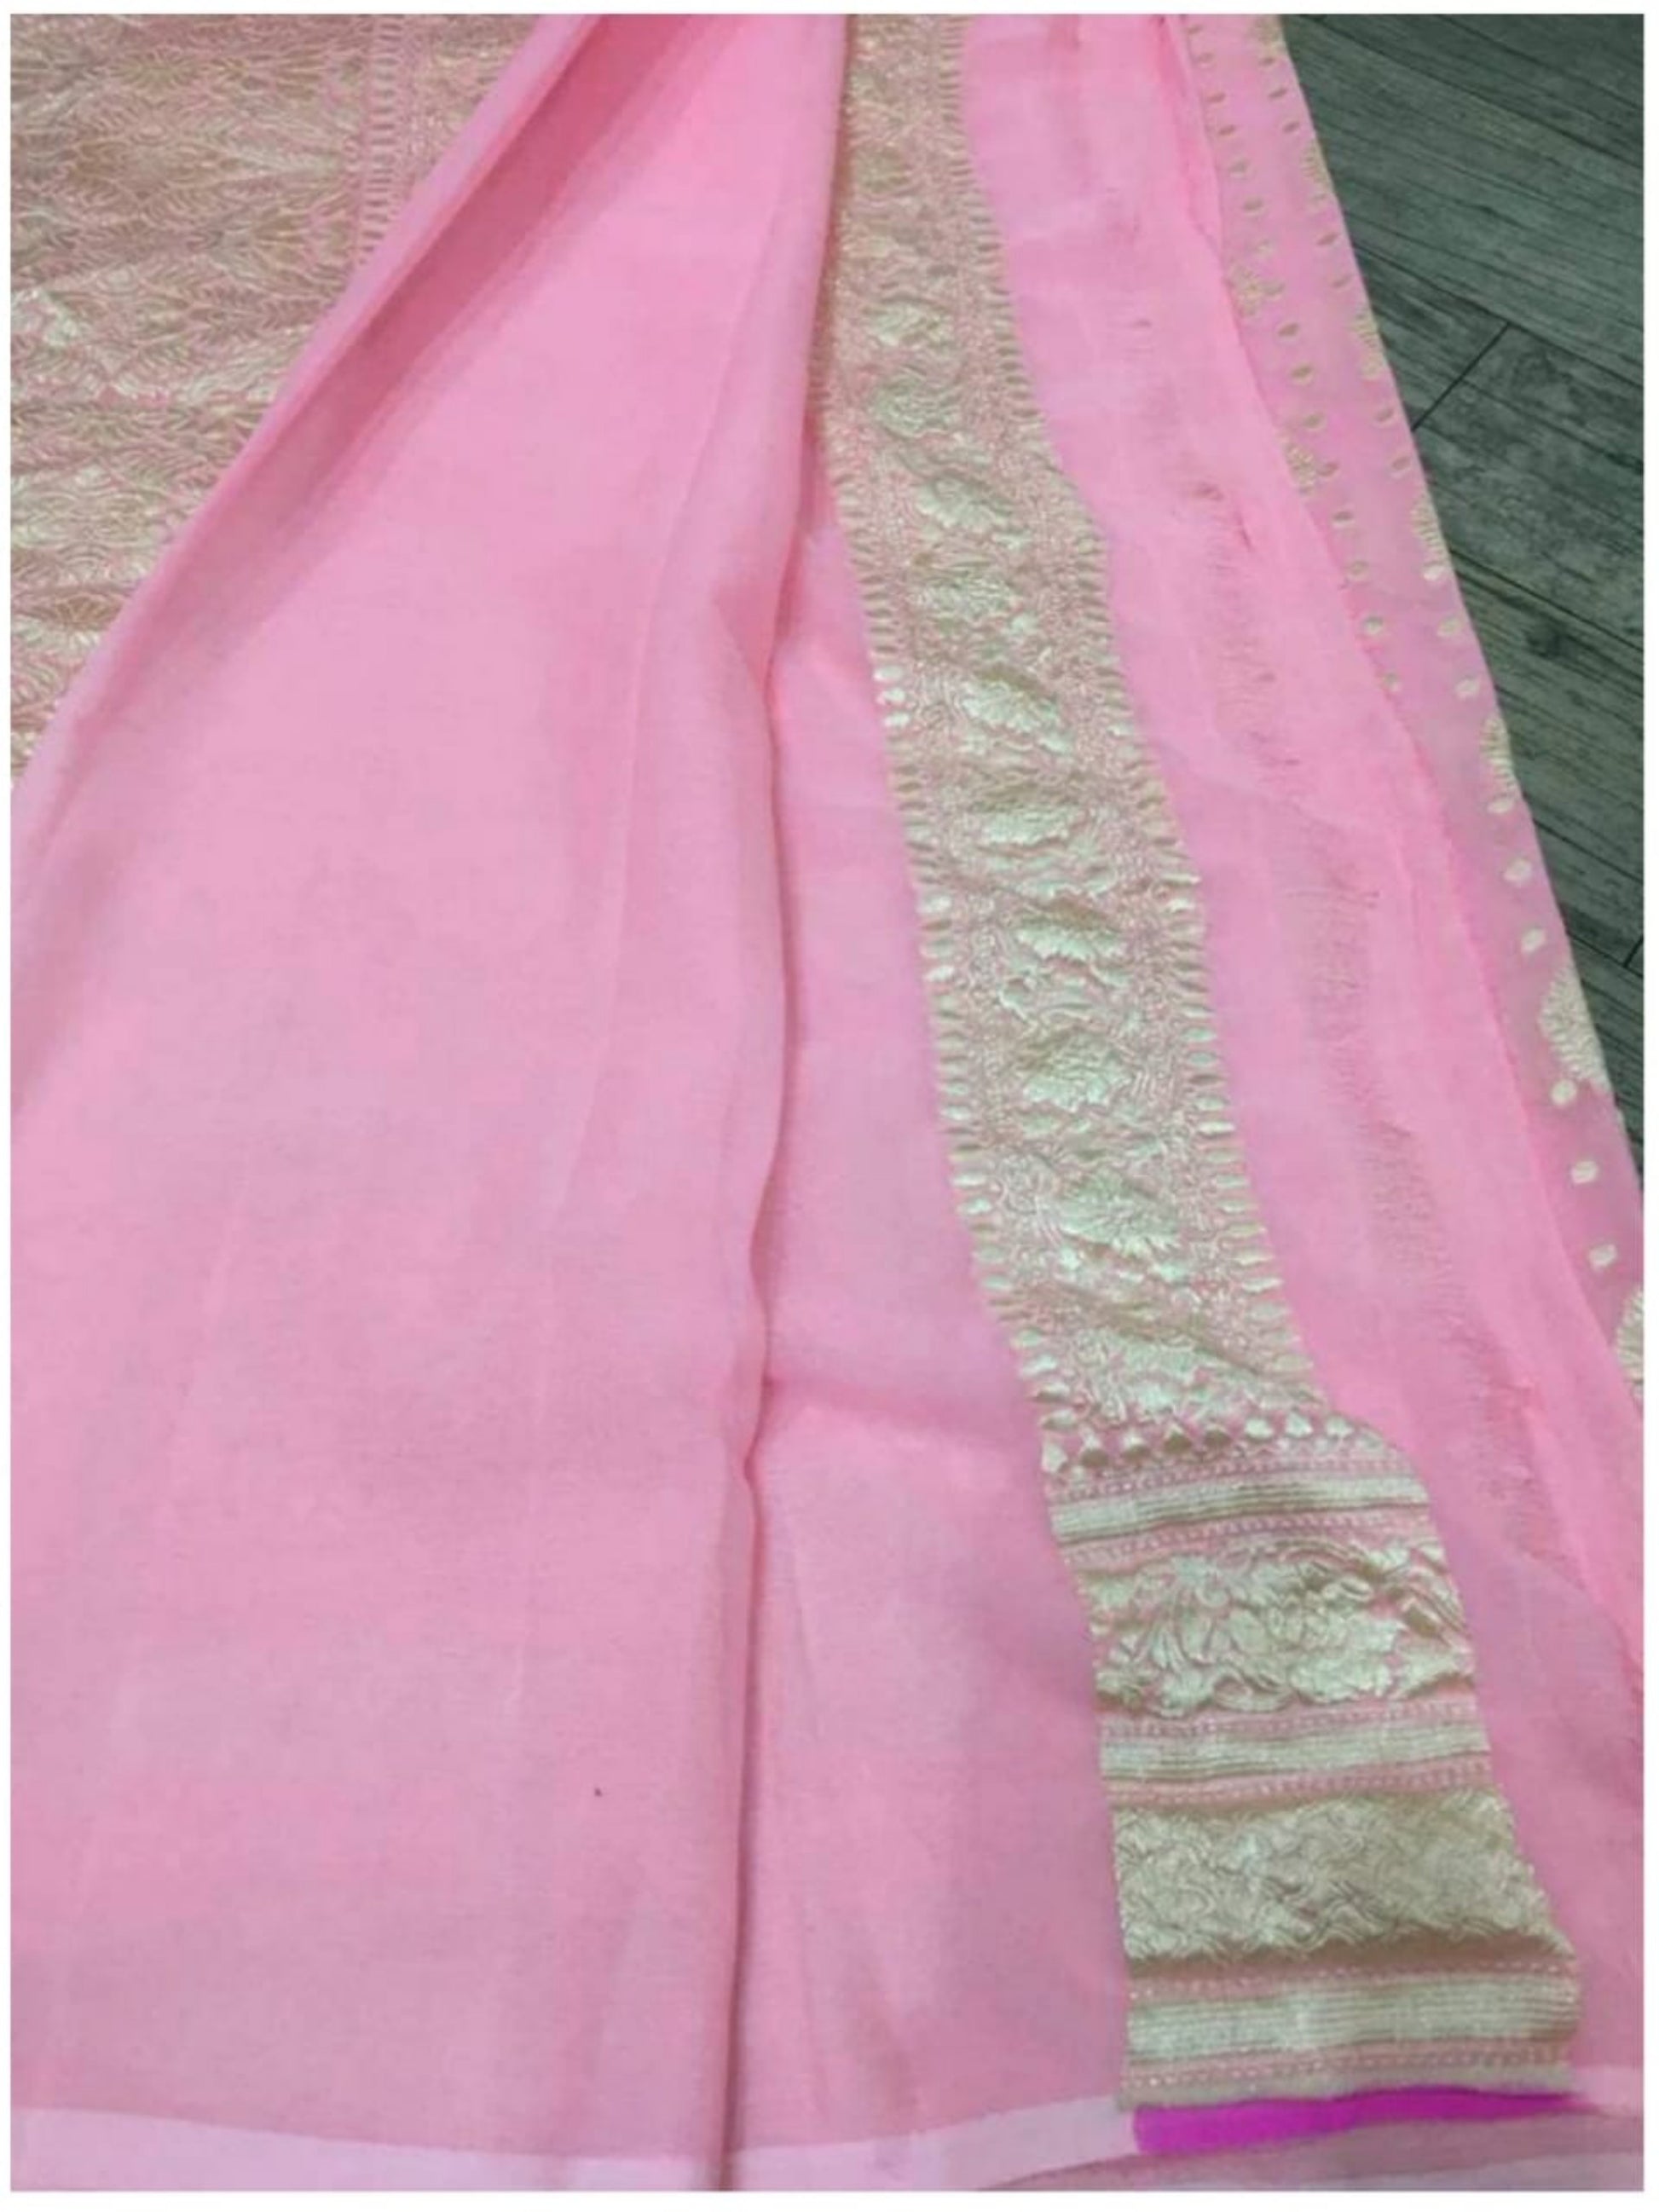 Khaddi Georgette Handloom Banarasi Saree - Water Zari - The Crafts Clothing